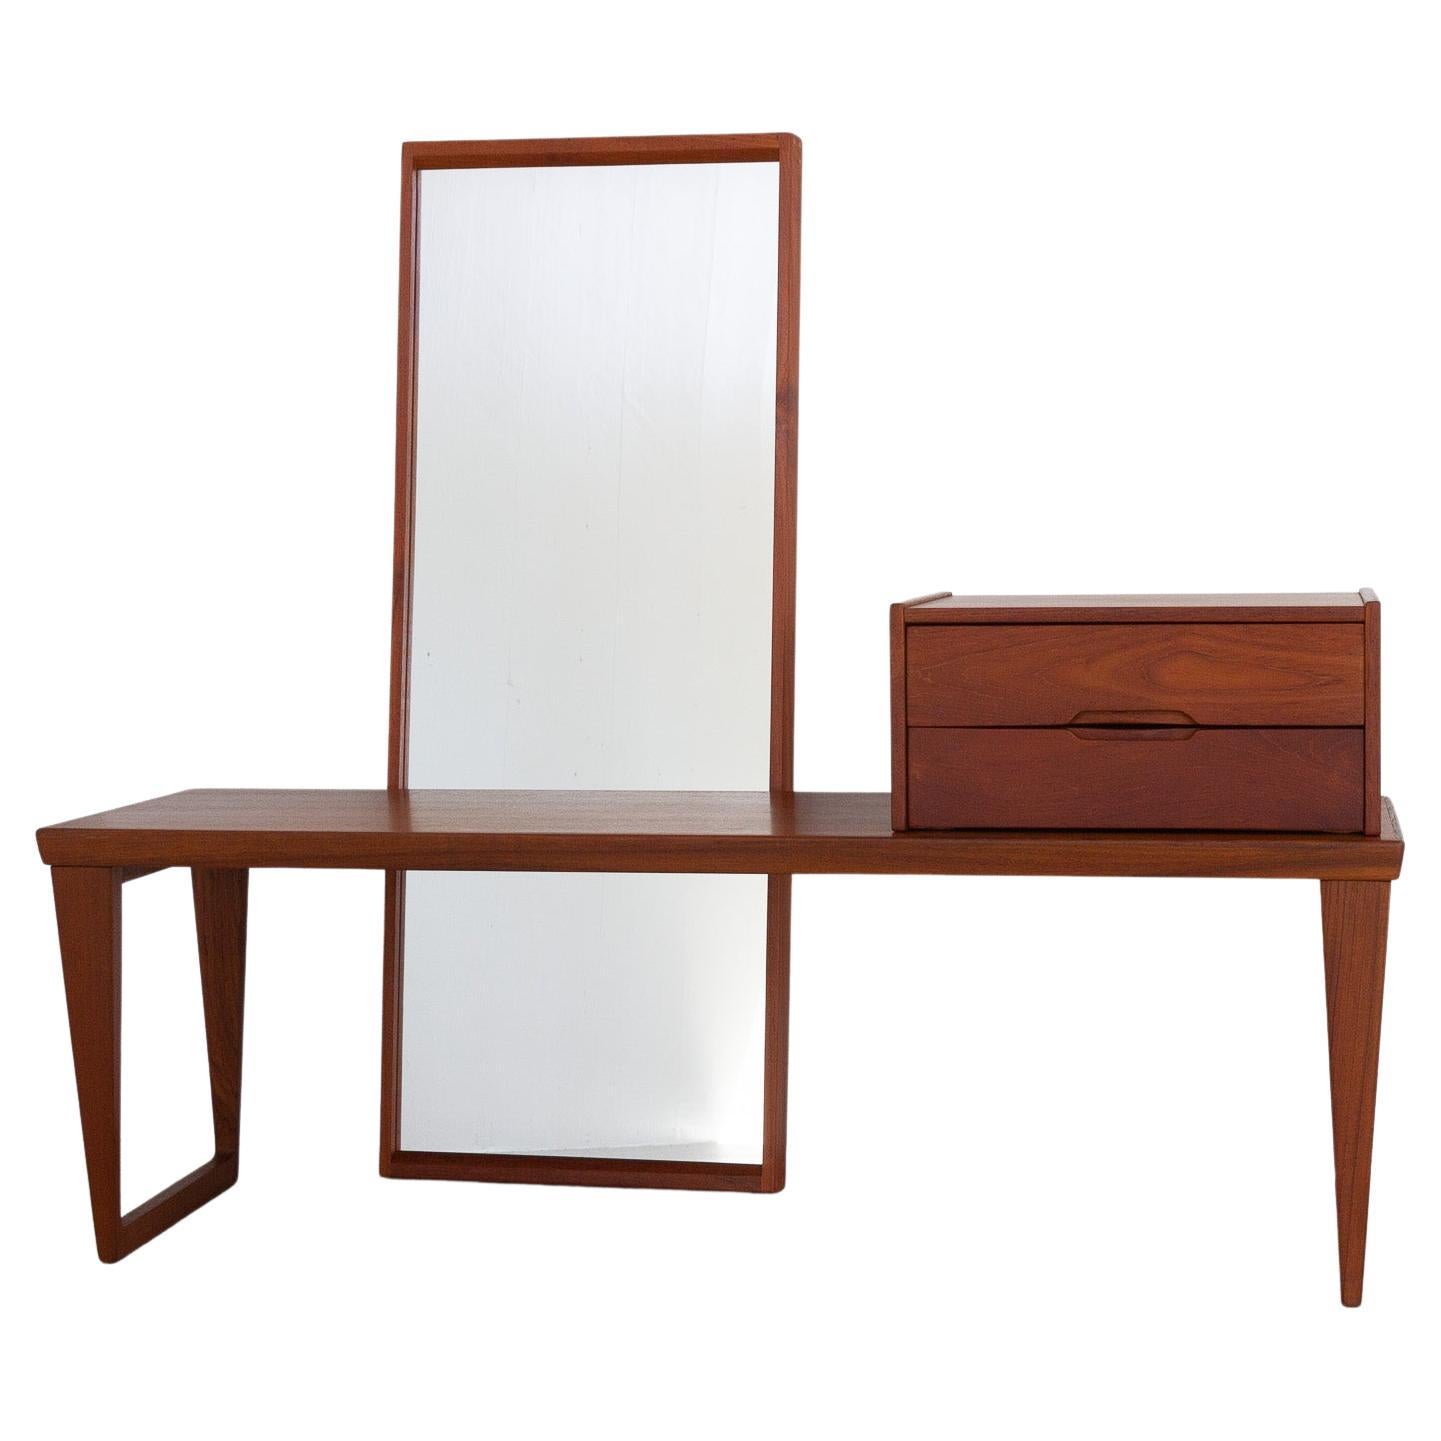 Danish Modern Teak Bench, Mirror and Drawers by Kai Kristiansen 1960s For Sale